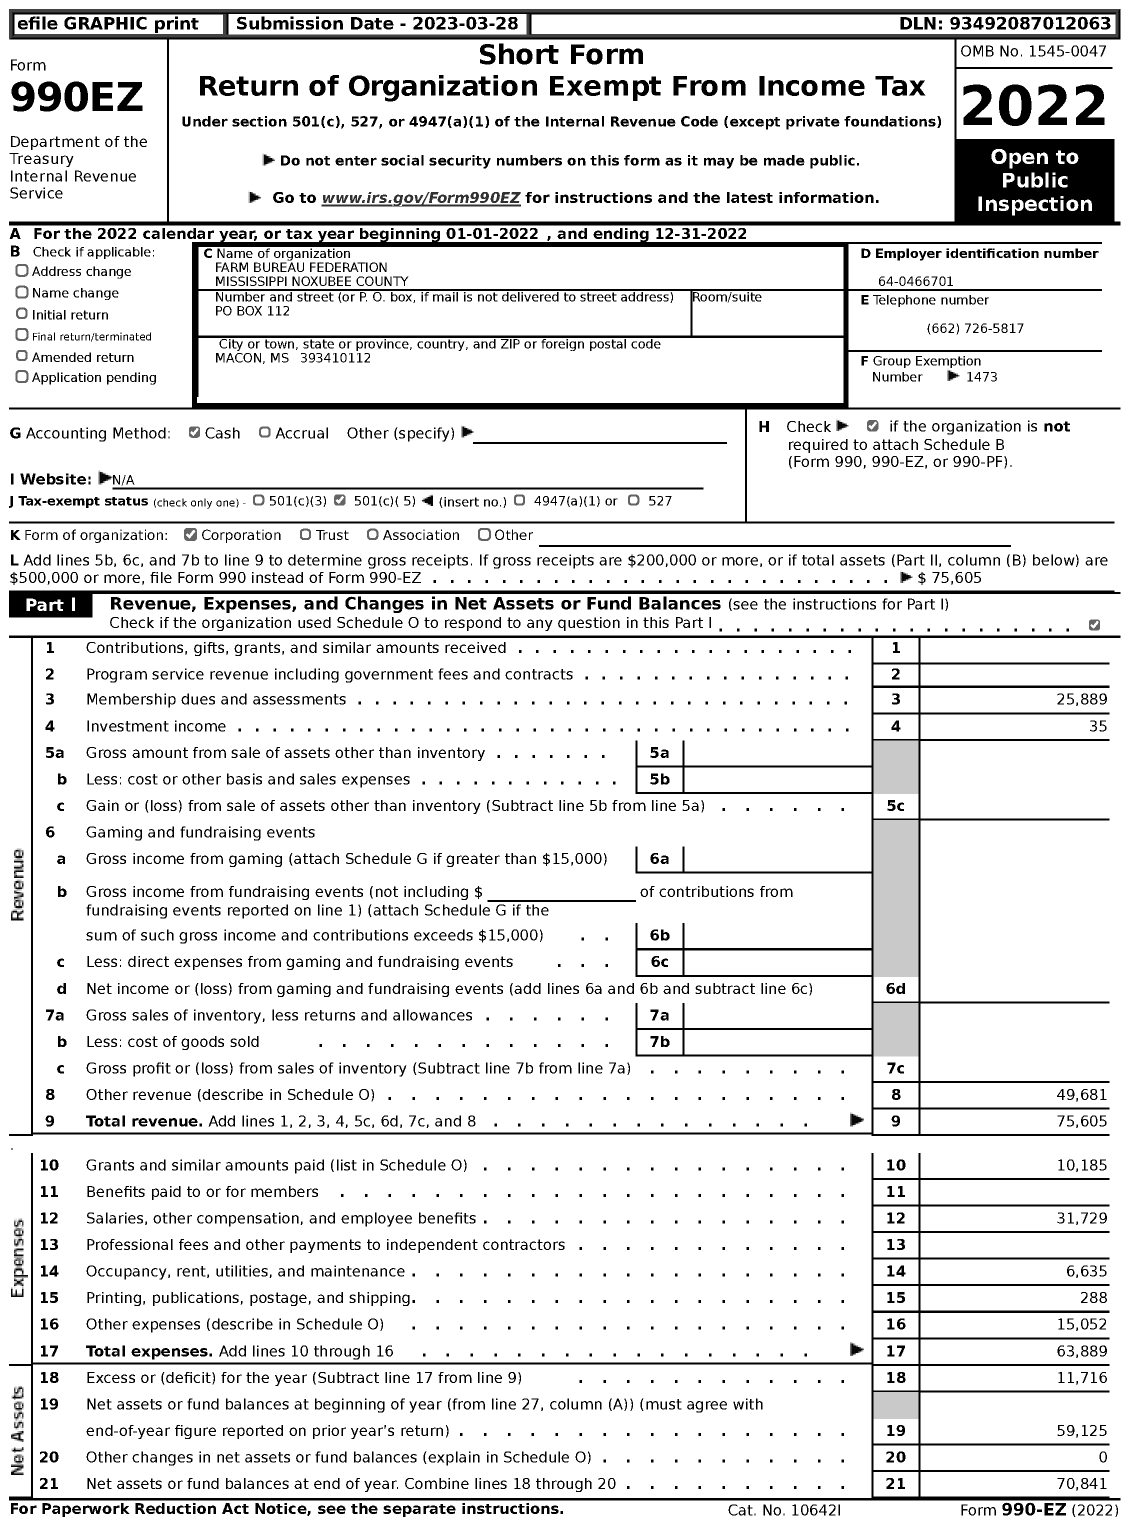 Image of first page of 2022 Form 990EZ for Mississippi Farm Bureau Federation - Noxubee County Farm Bureau